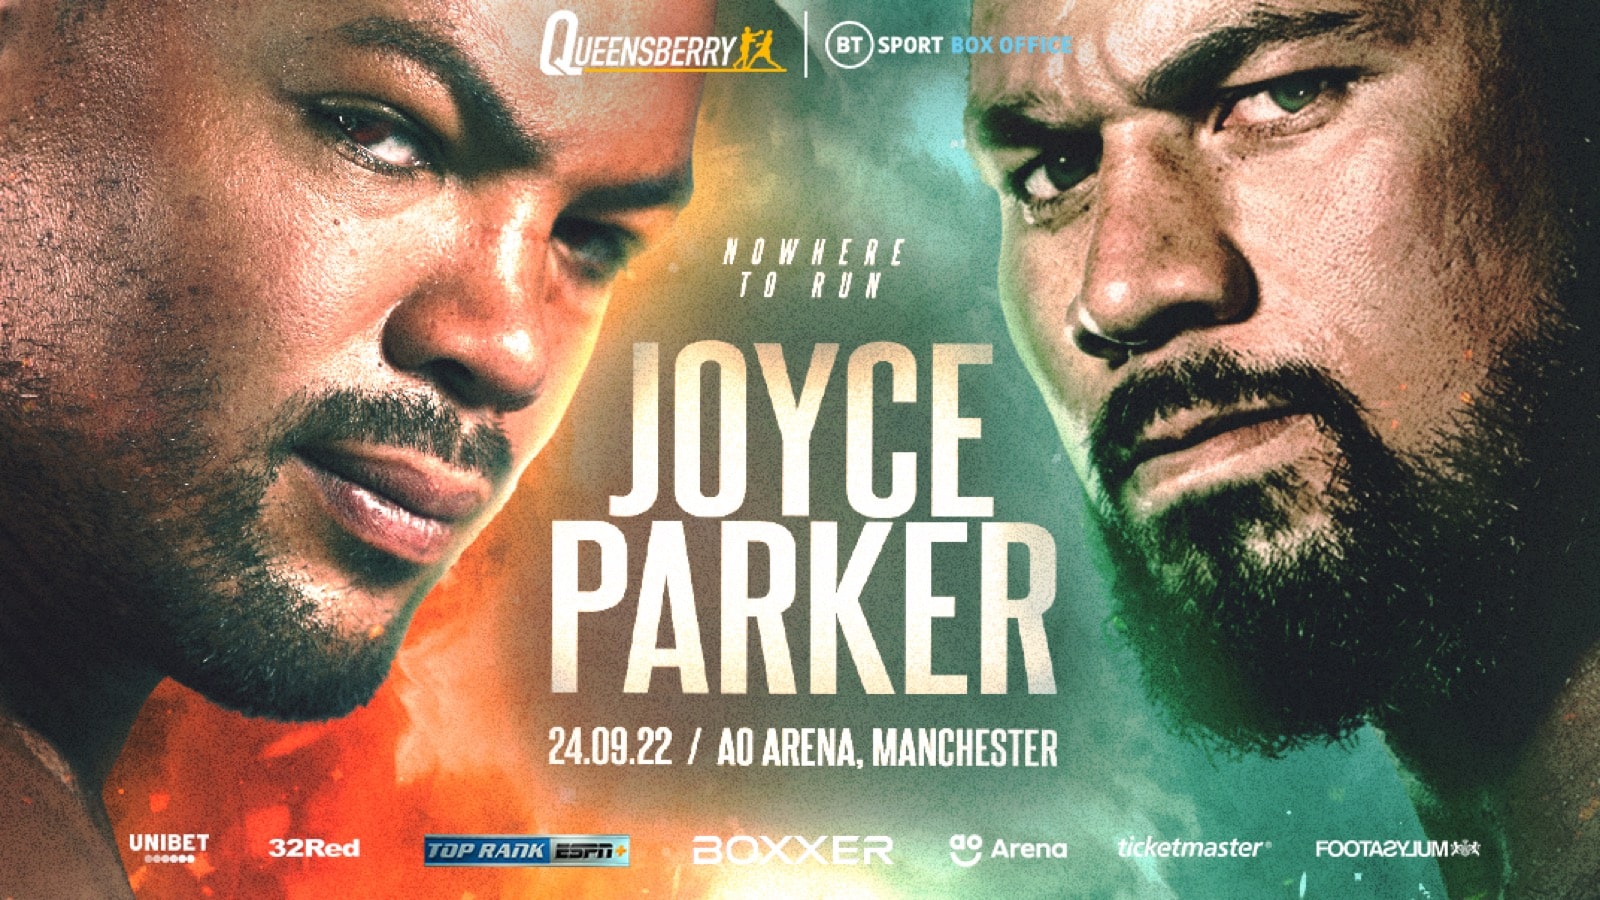 Joe Joyce, Joseph Parker boxing image / photo